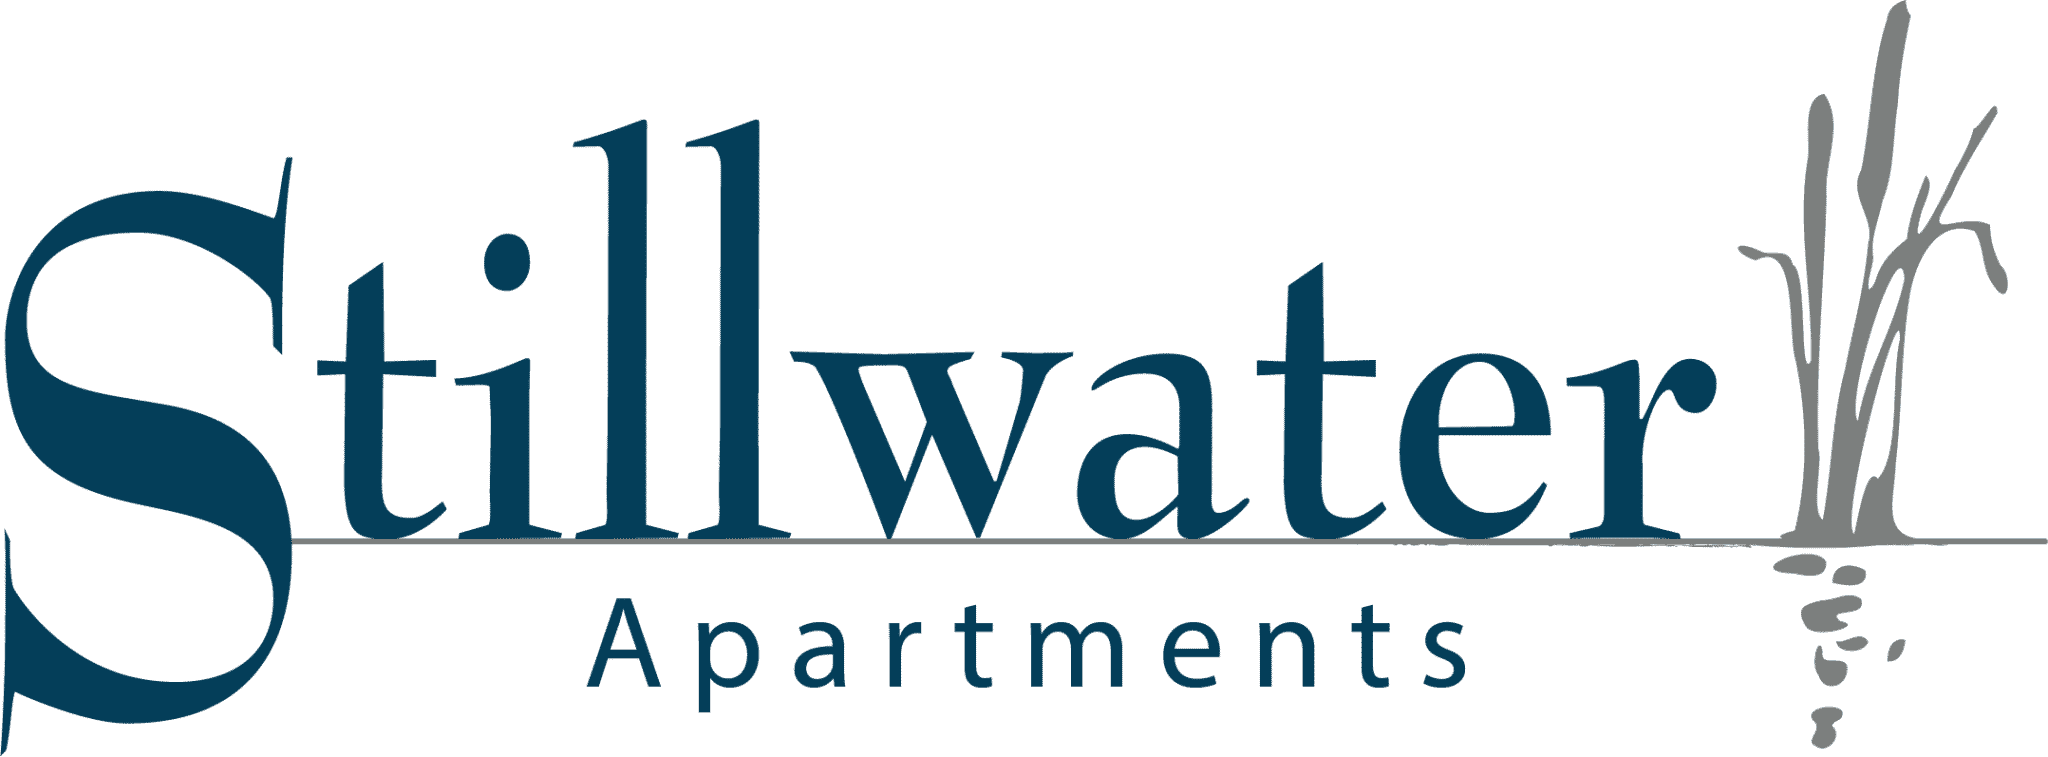 Stillwater Apartments Logo